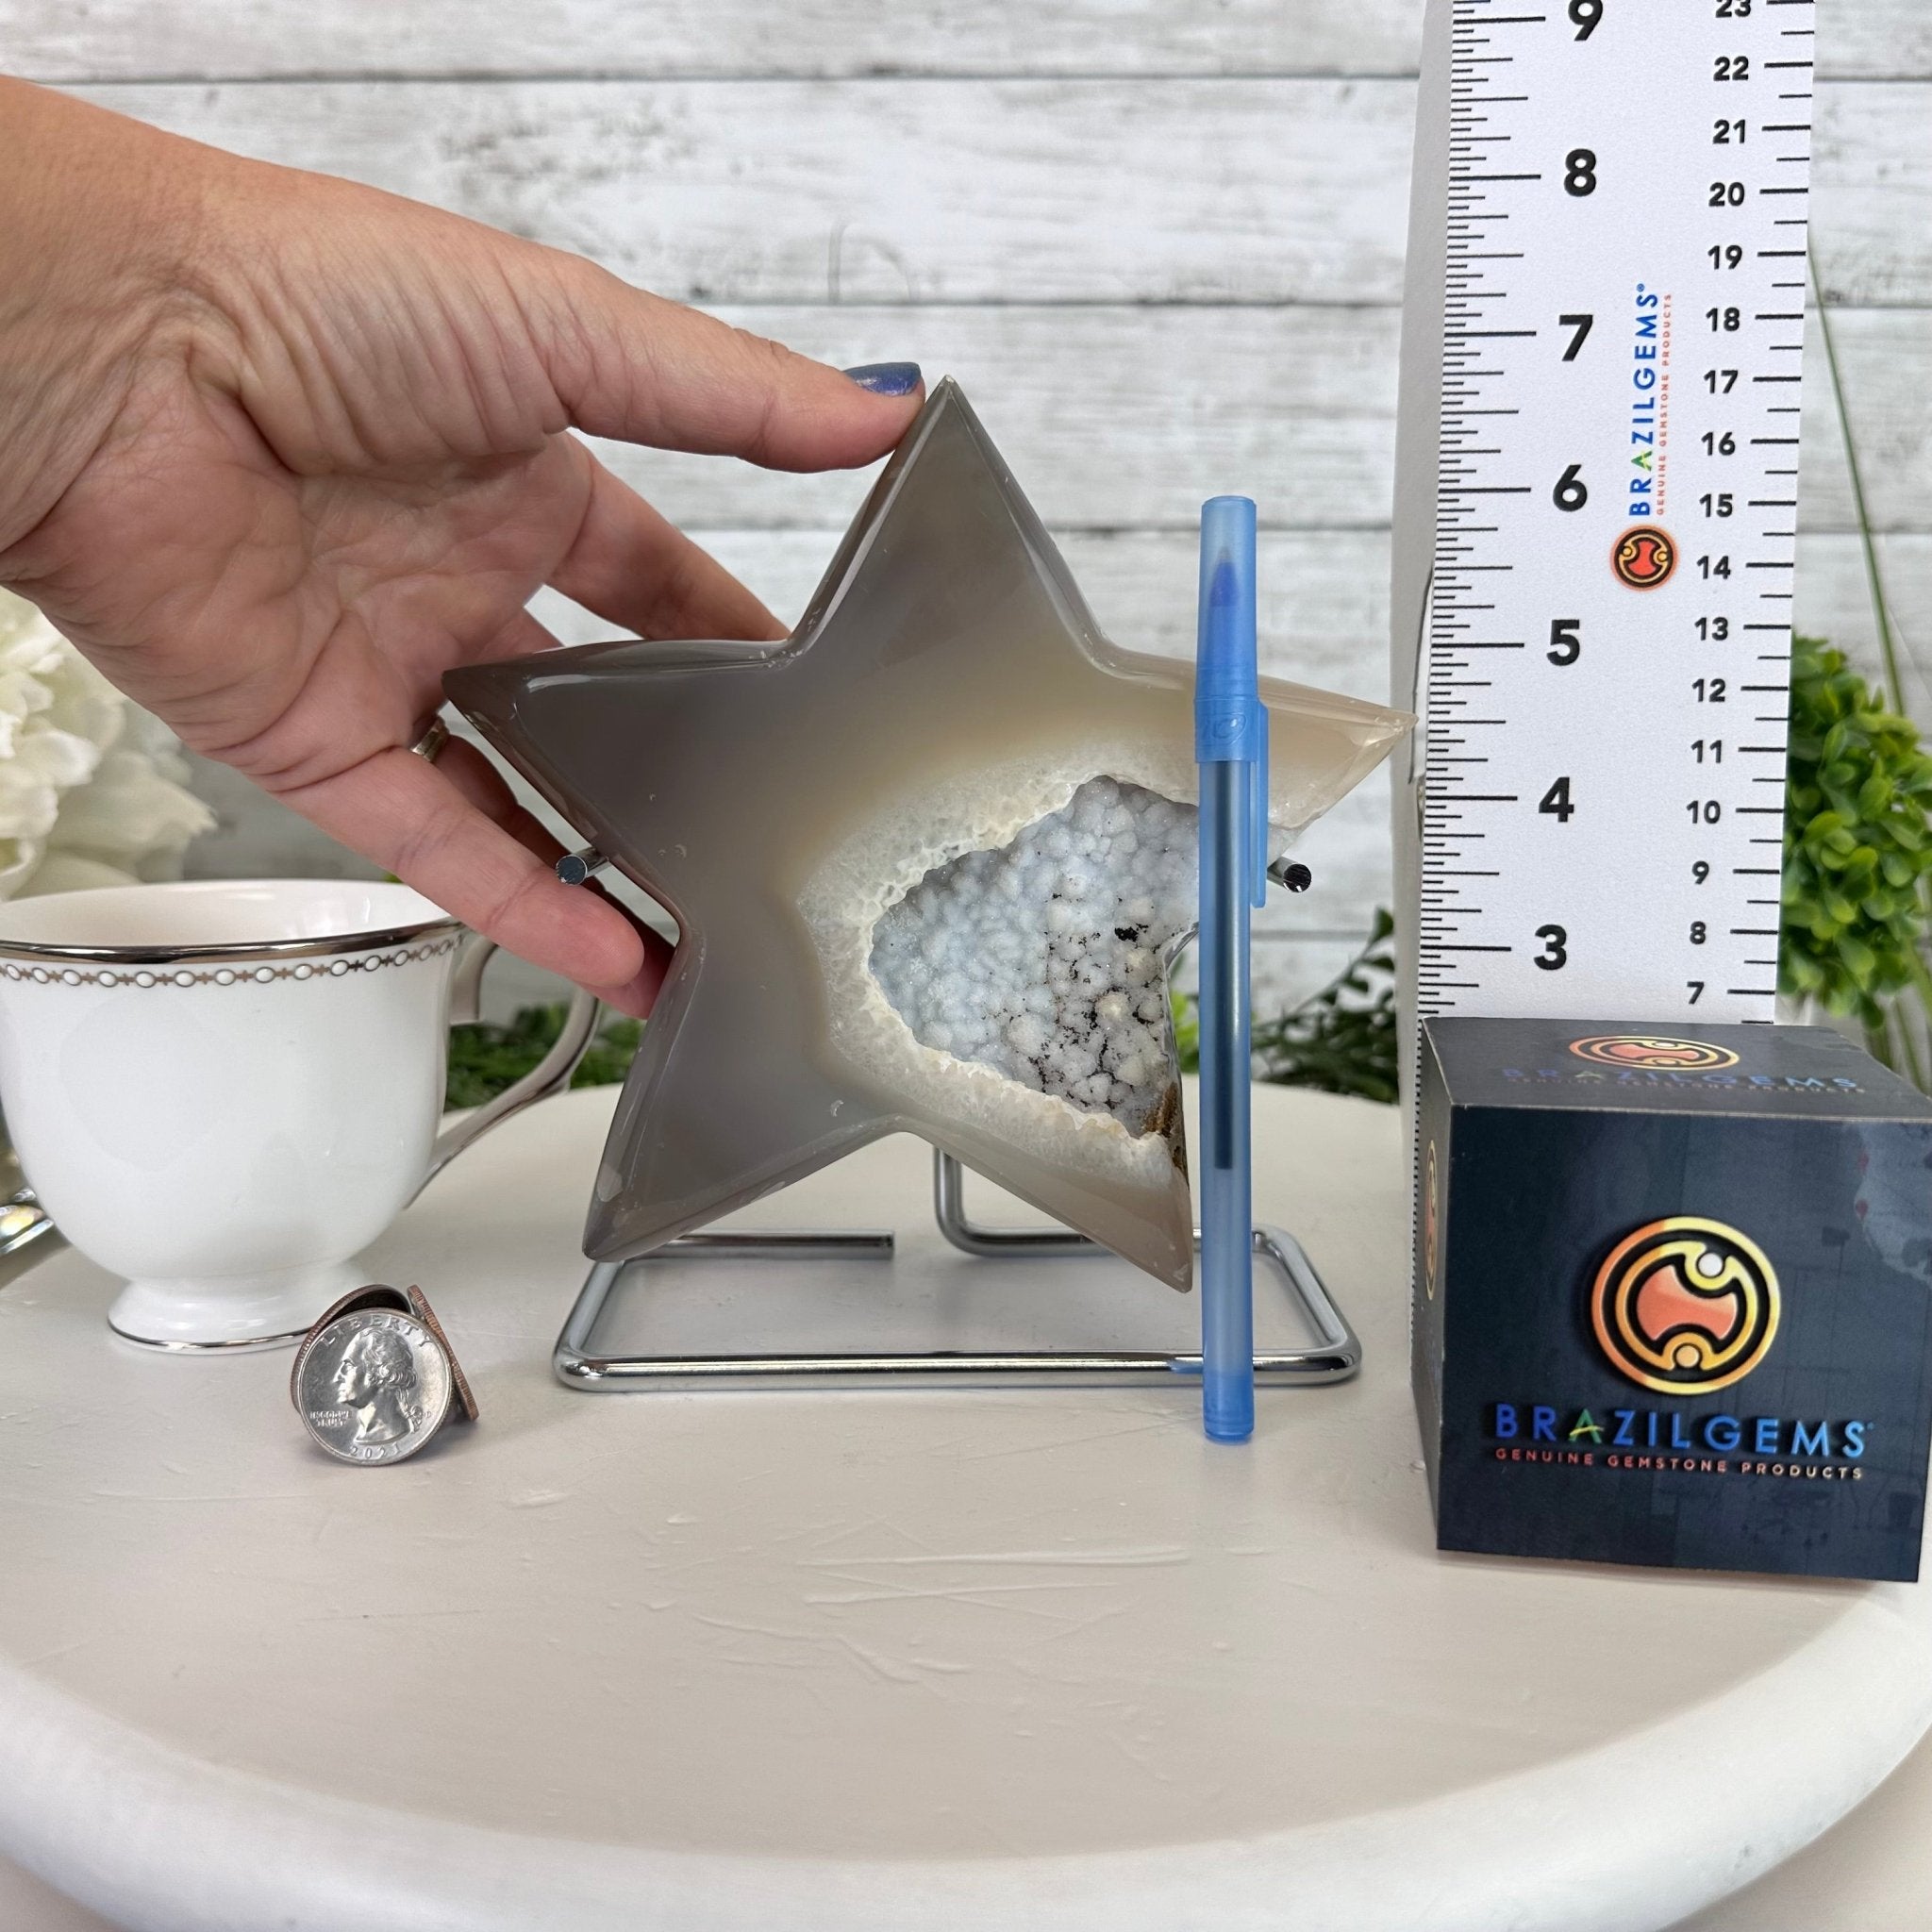 Polished Agate Star on a Metal Stand, 3.6 lbs & 6.7" Tall #5273-0020 - Brazil GemsBrazil GemsPolished Agate Star on a Metal Stand, 3.6 lbs & 6.7" Tall #5273-0020Stars5273-0020